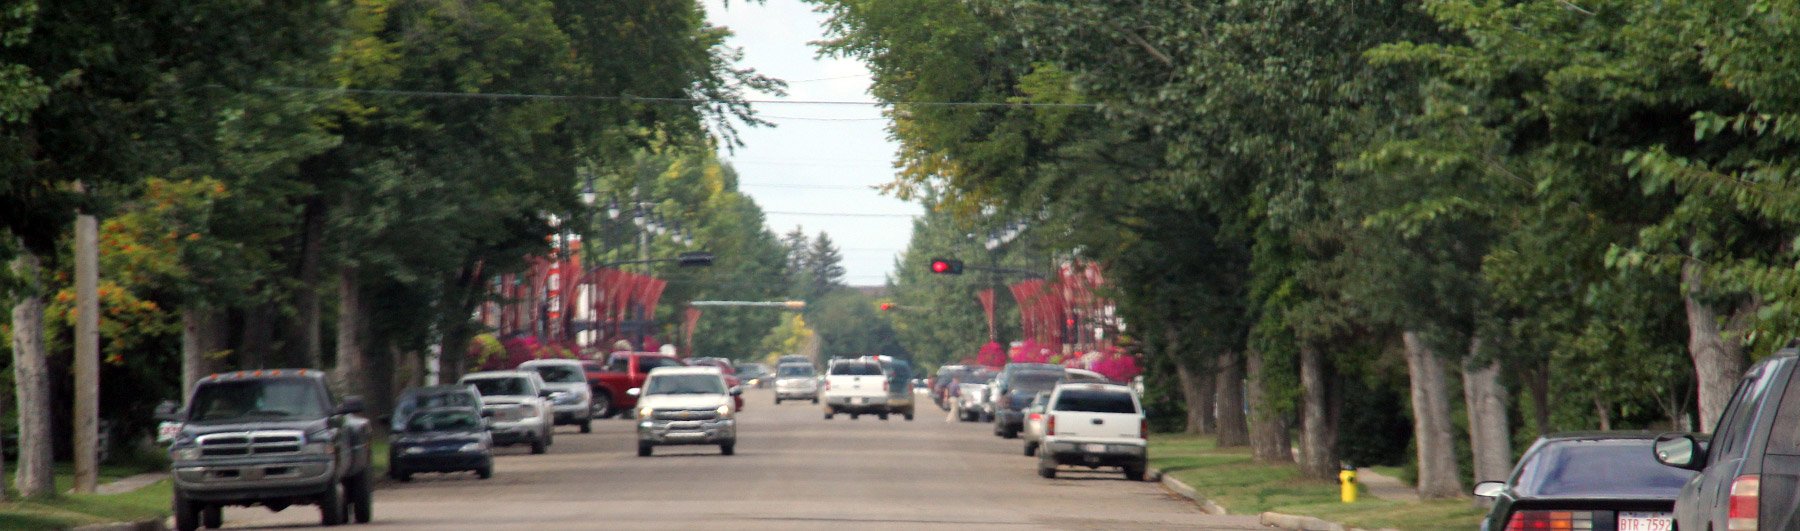 Main Street 2